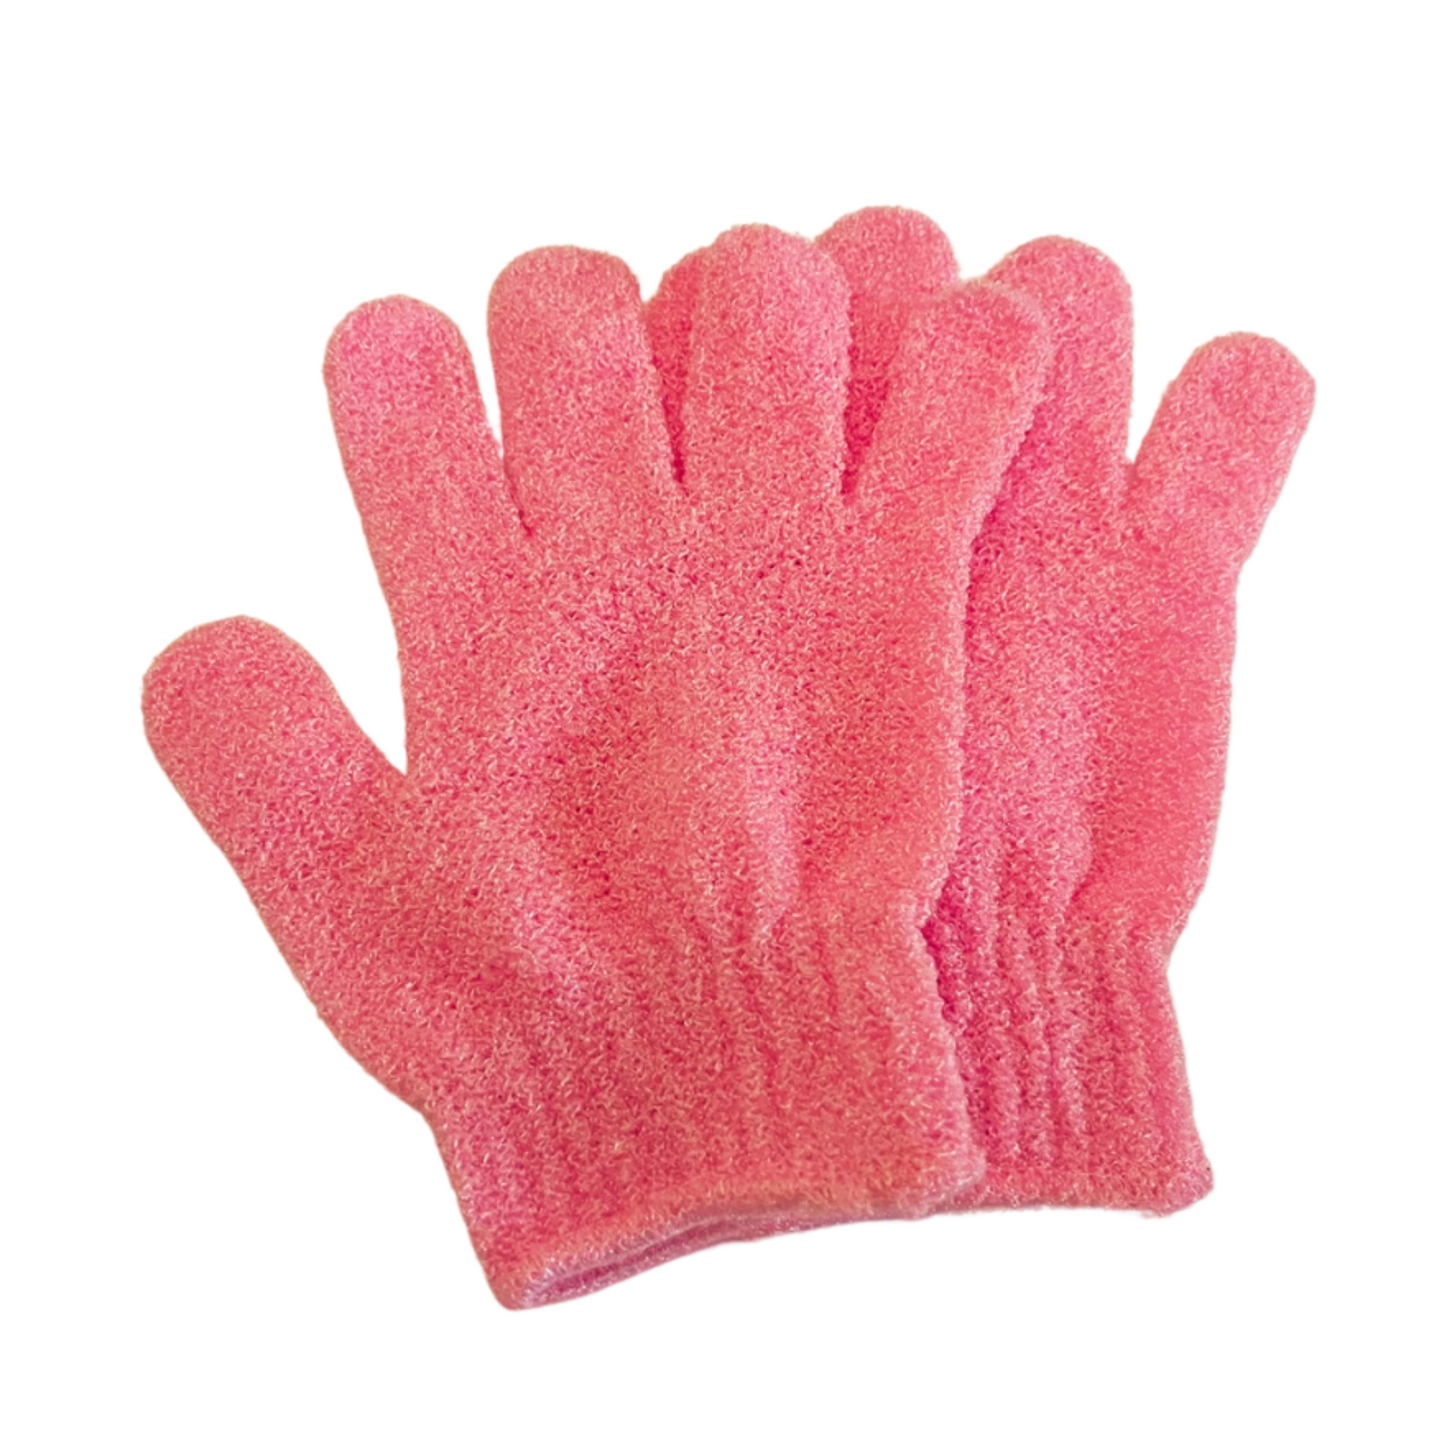 Pink Dual Exfoliating Gloves Wash for Shower Body Scrub/Bath Gloves Exfoliating Mitt Remove Dead Skin Cells